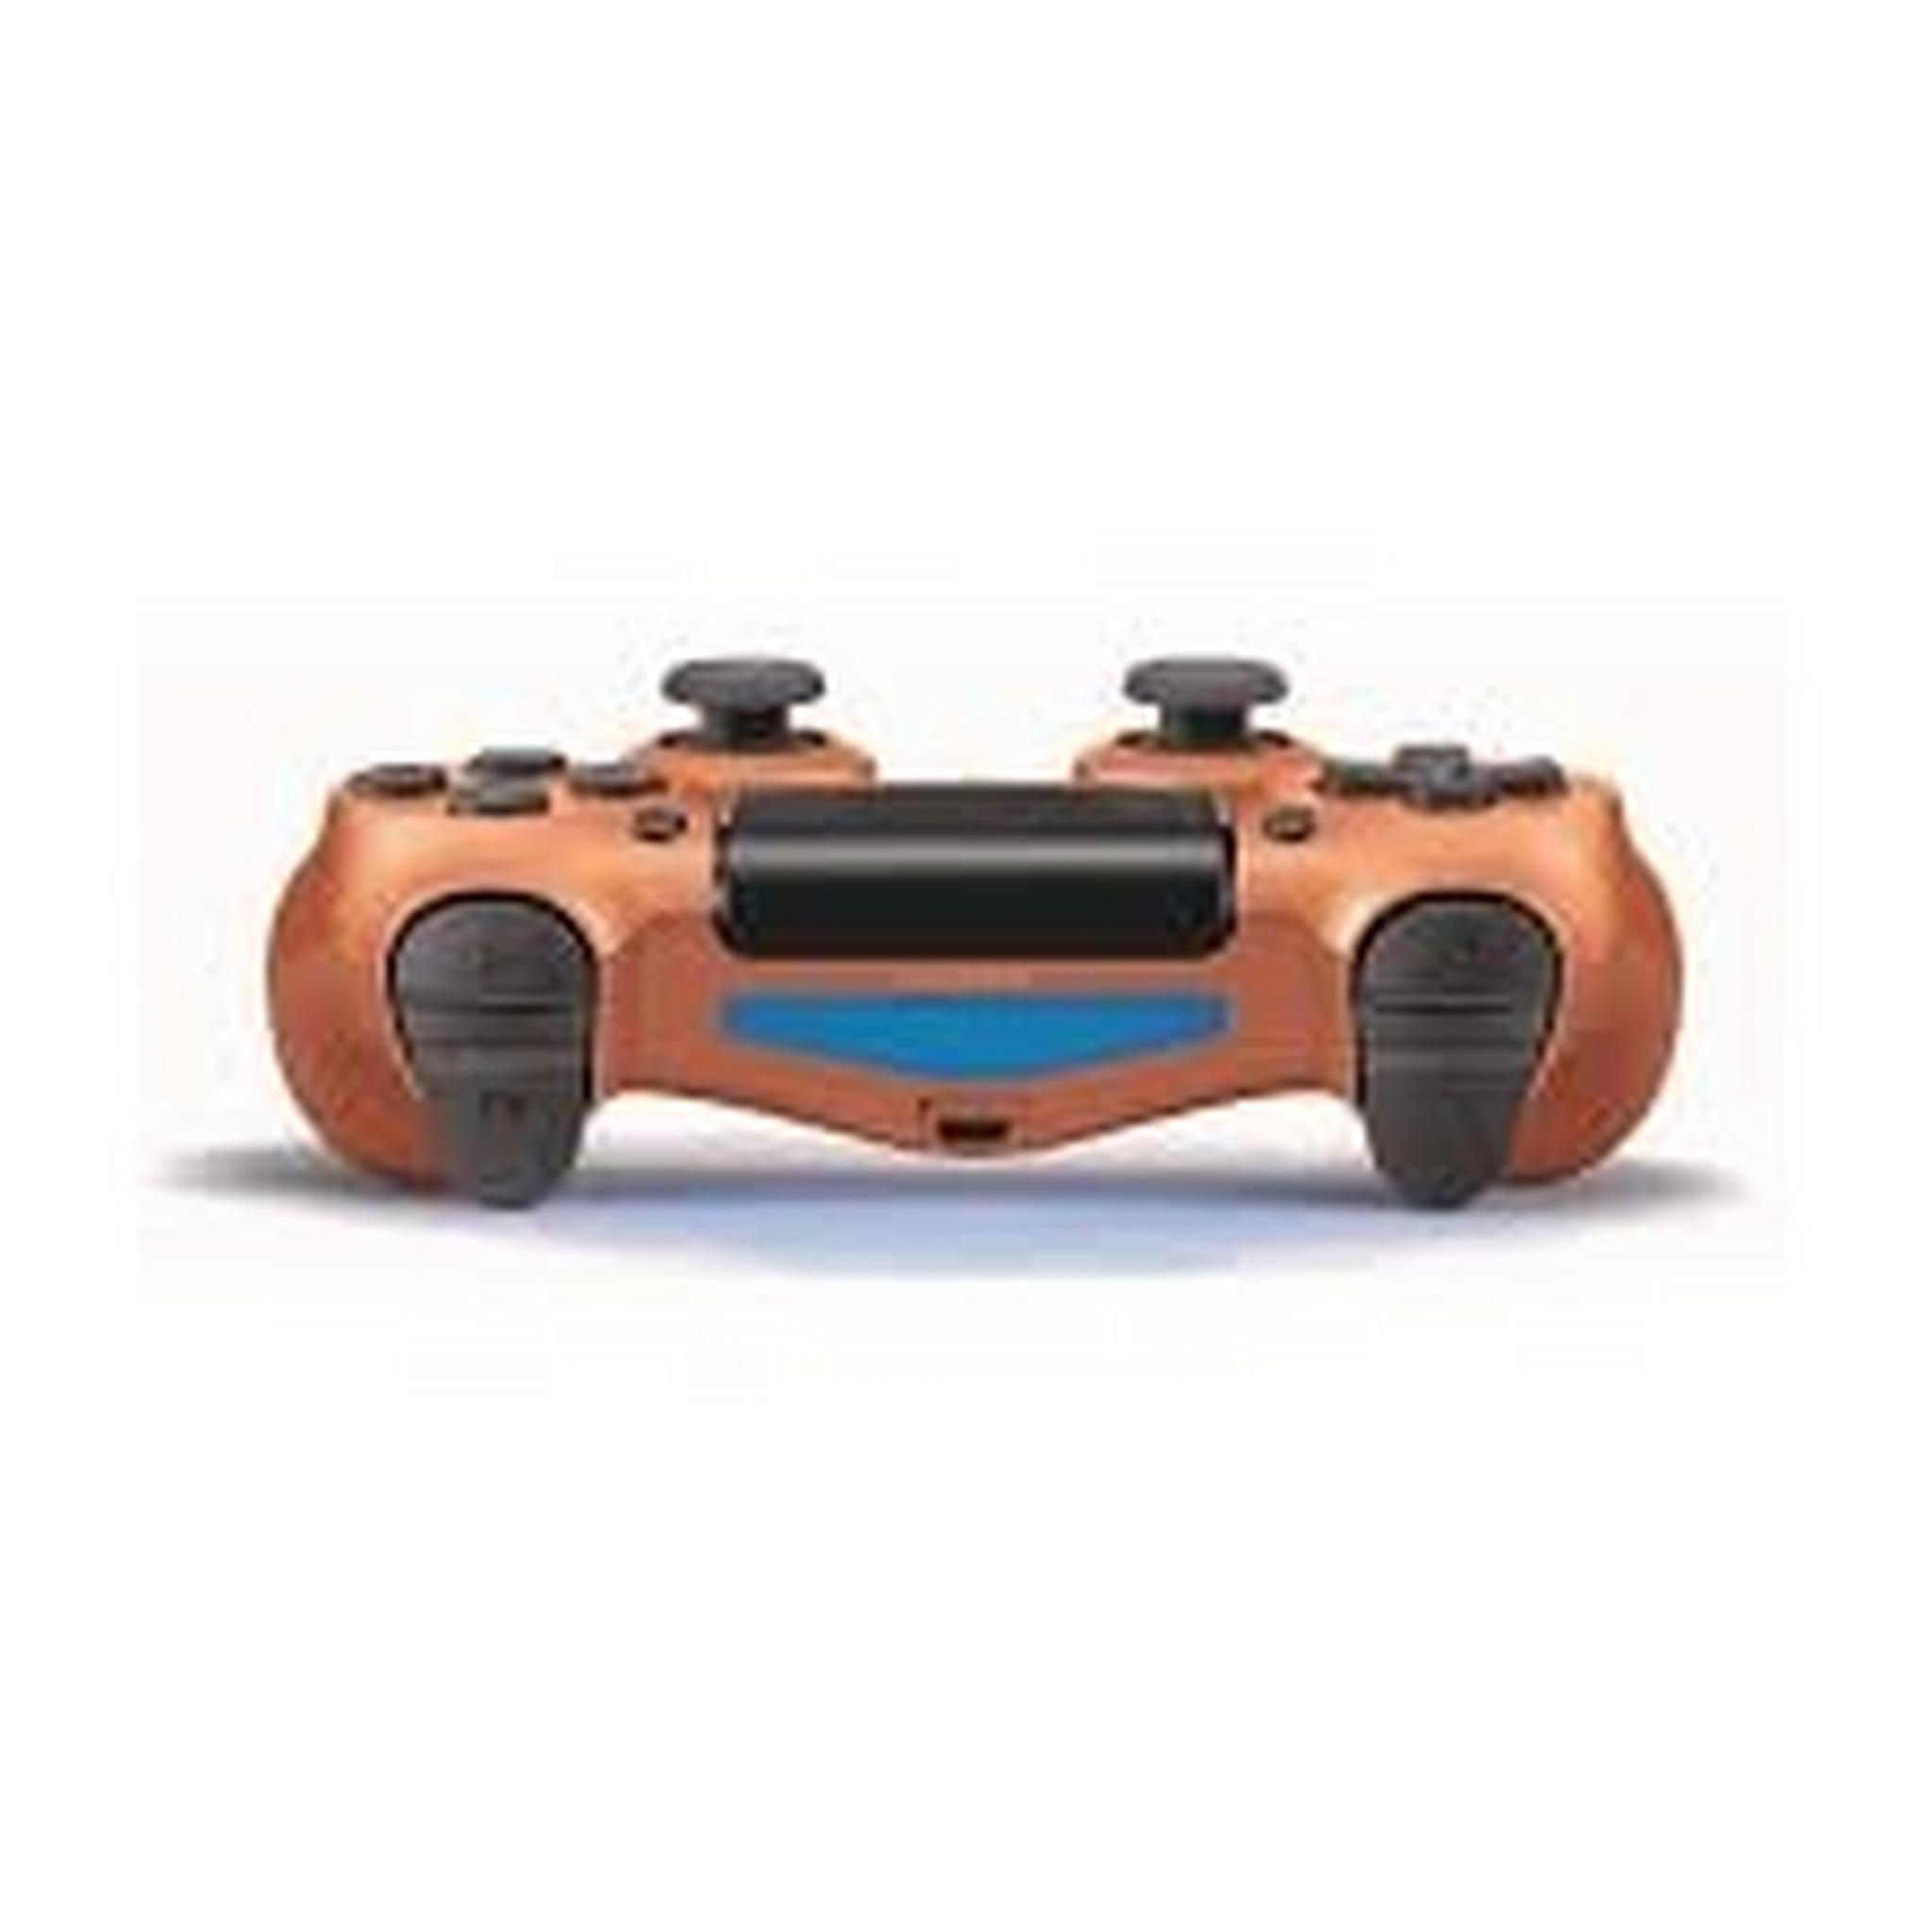 PlayStation 4 Wireless DualShock 4 Controller - Copper